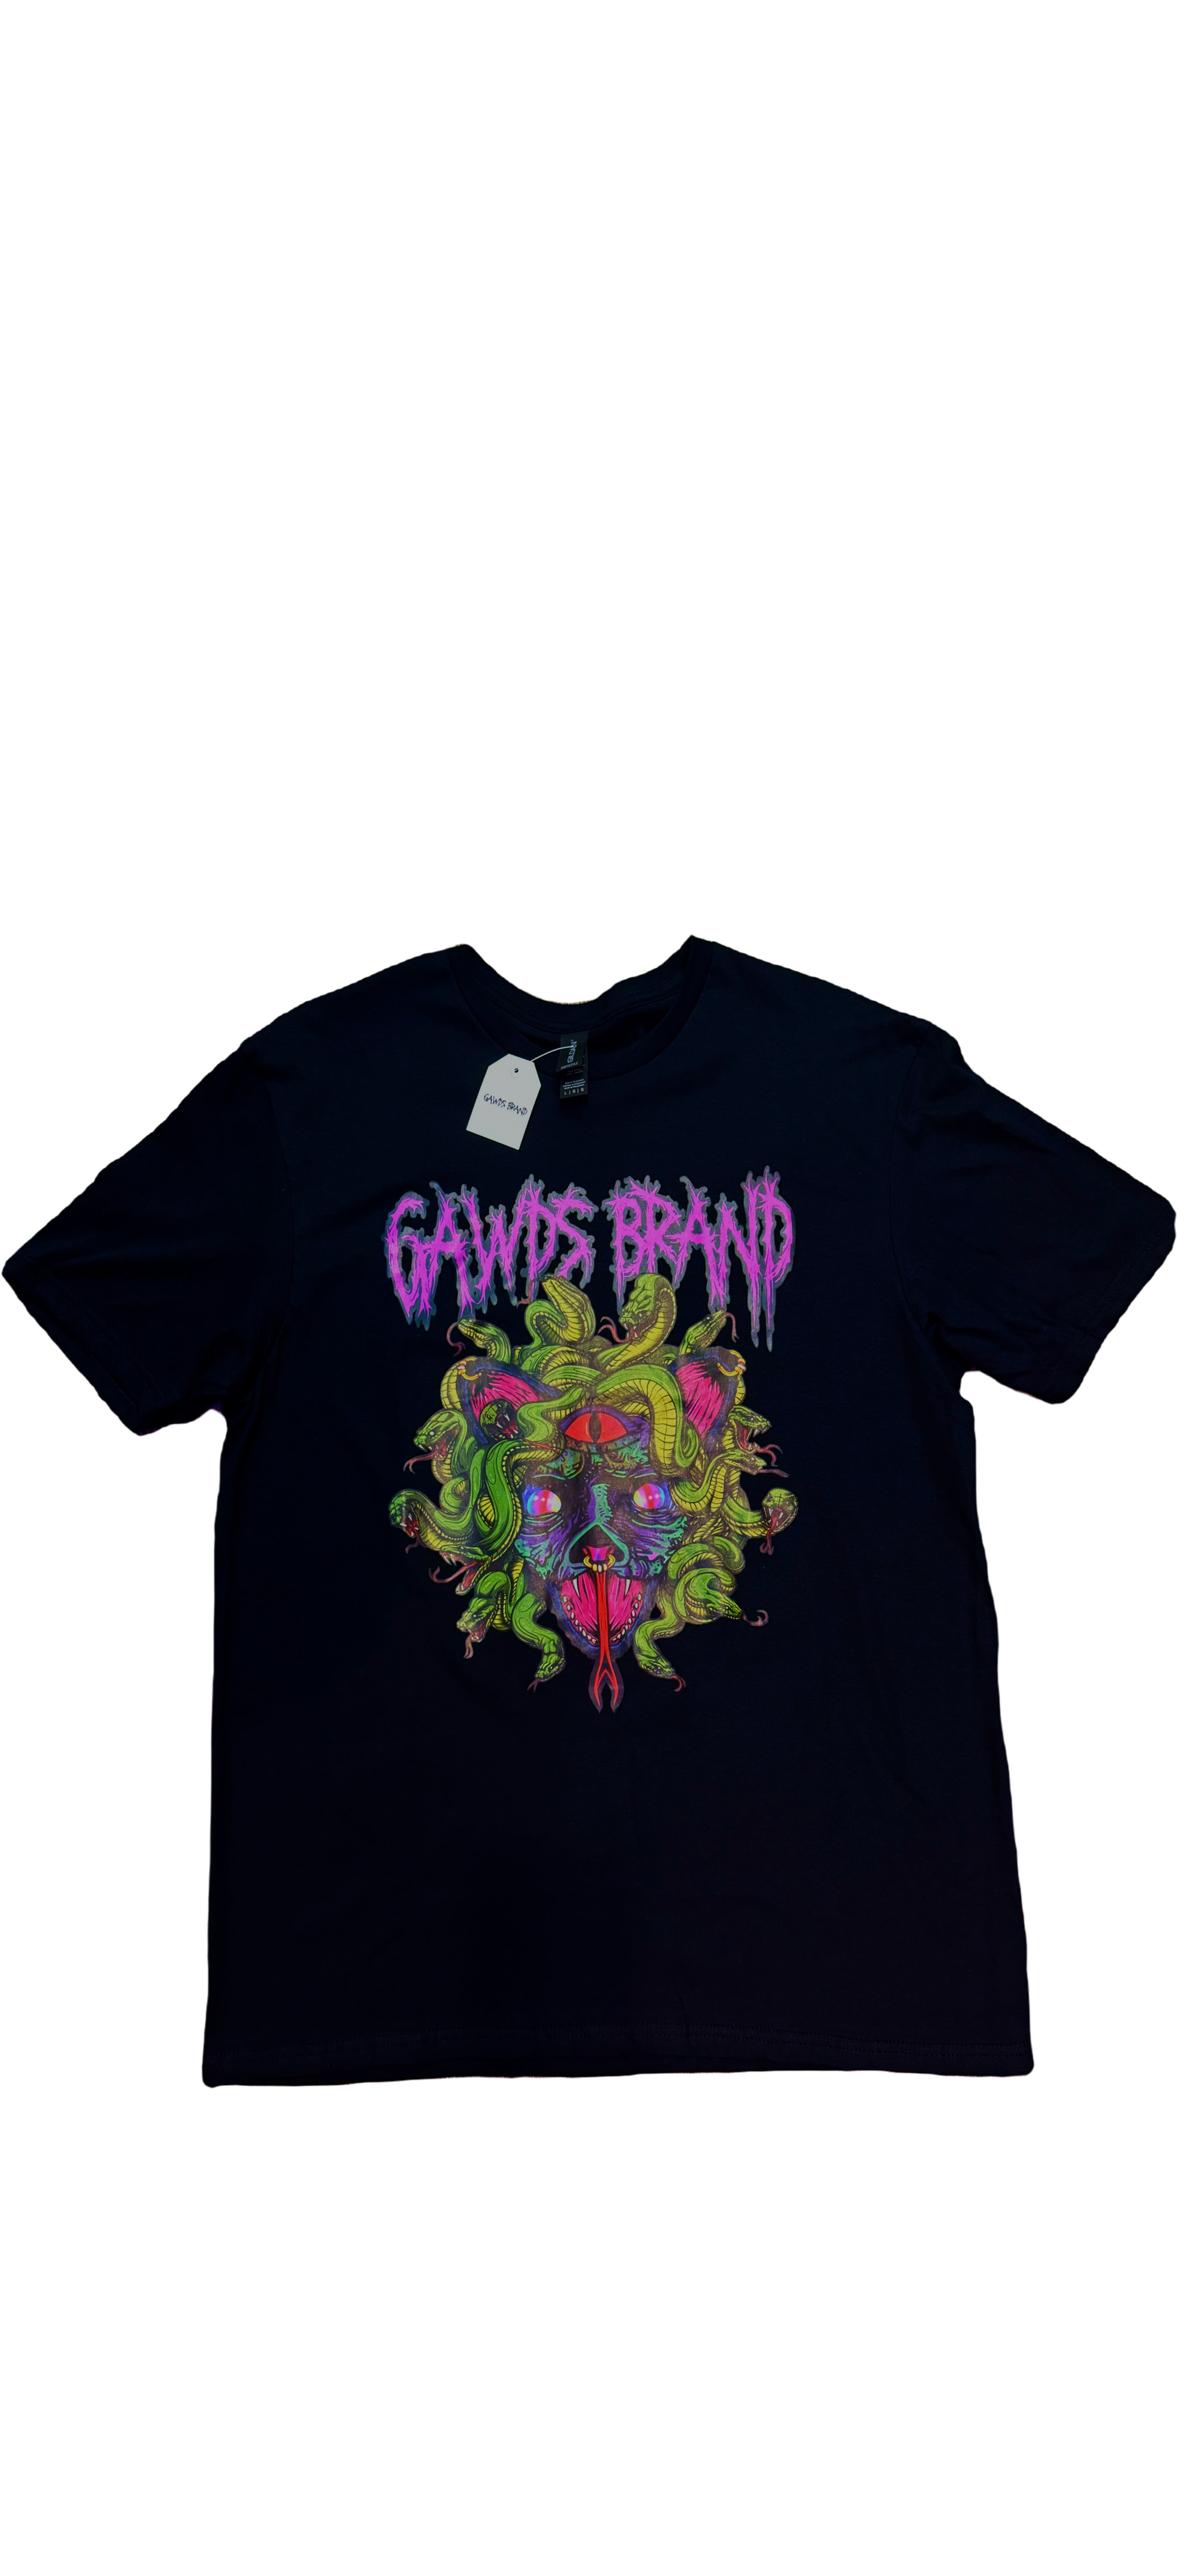 Medusa Gawds t-shirt ￼ ￼